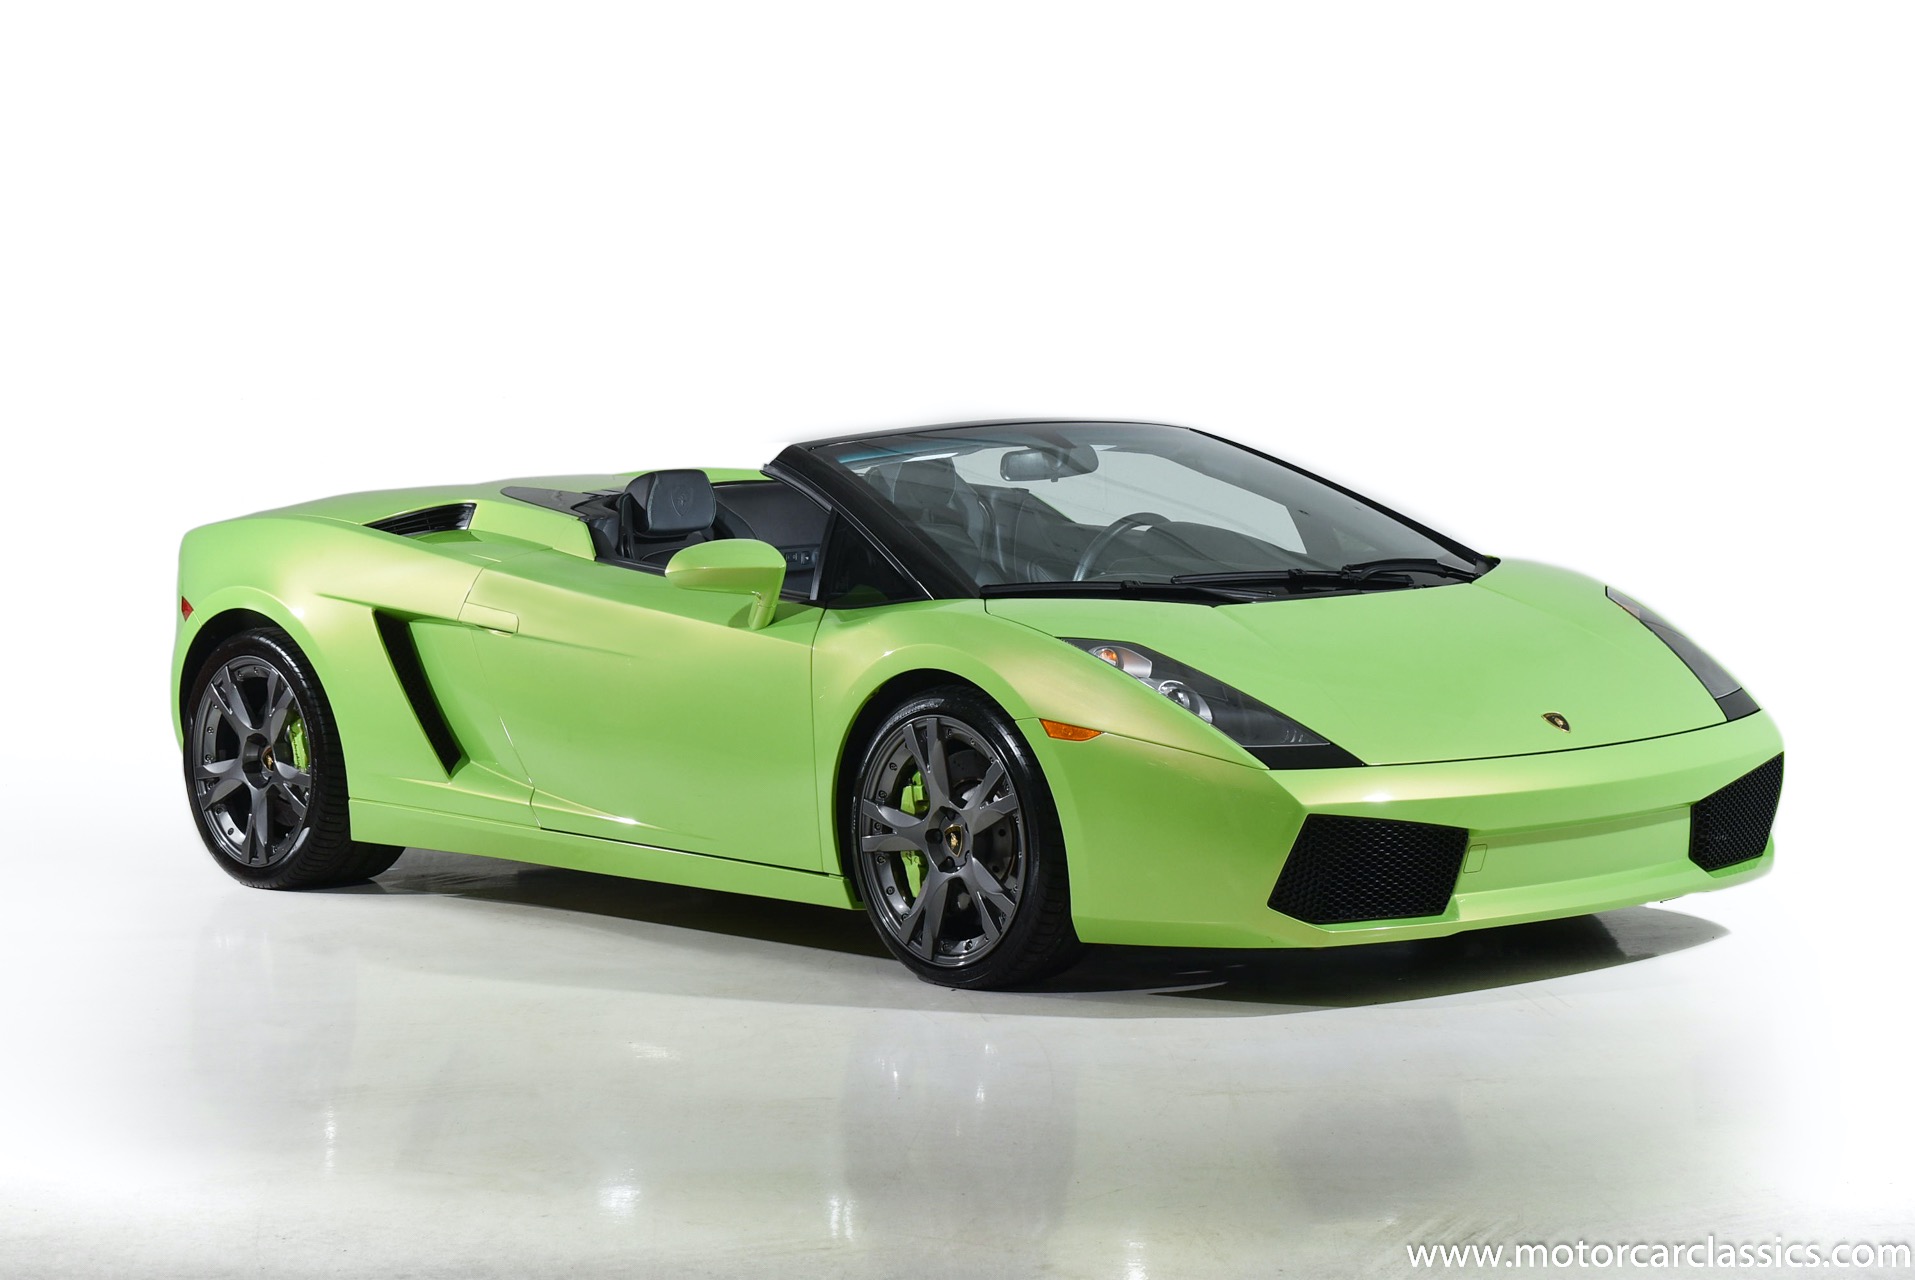 Used 2008 Lamborghini Gallardo Spyder For Sale ($109,900) | Motorcar  Classics Stock #1629